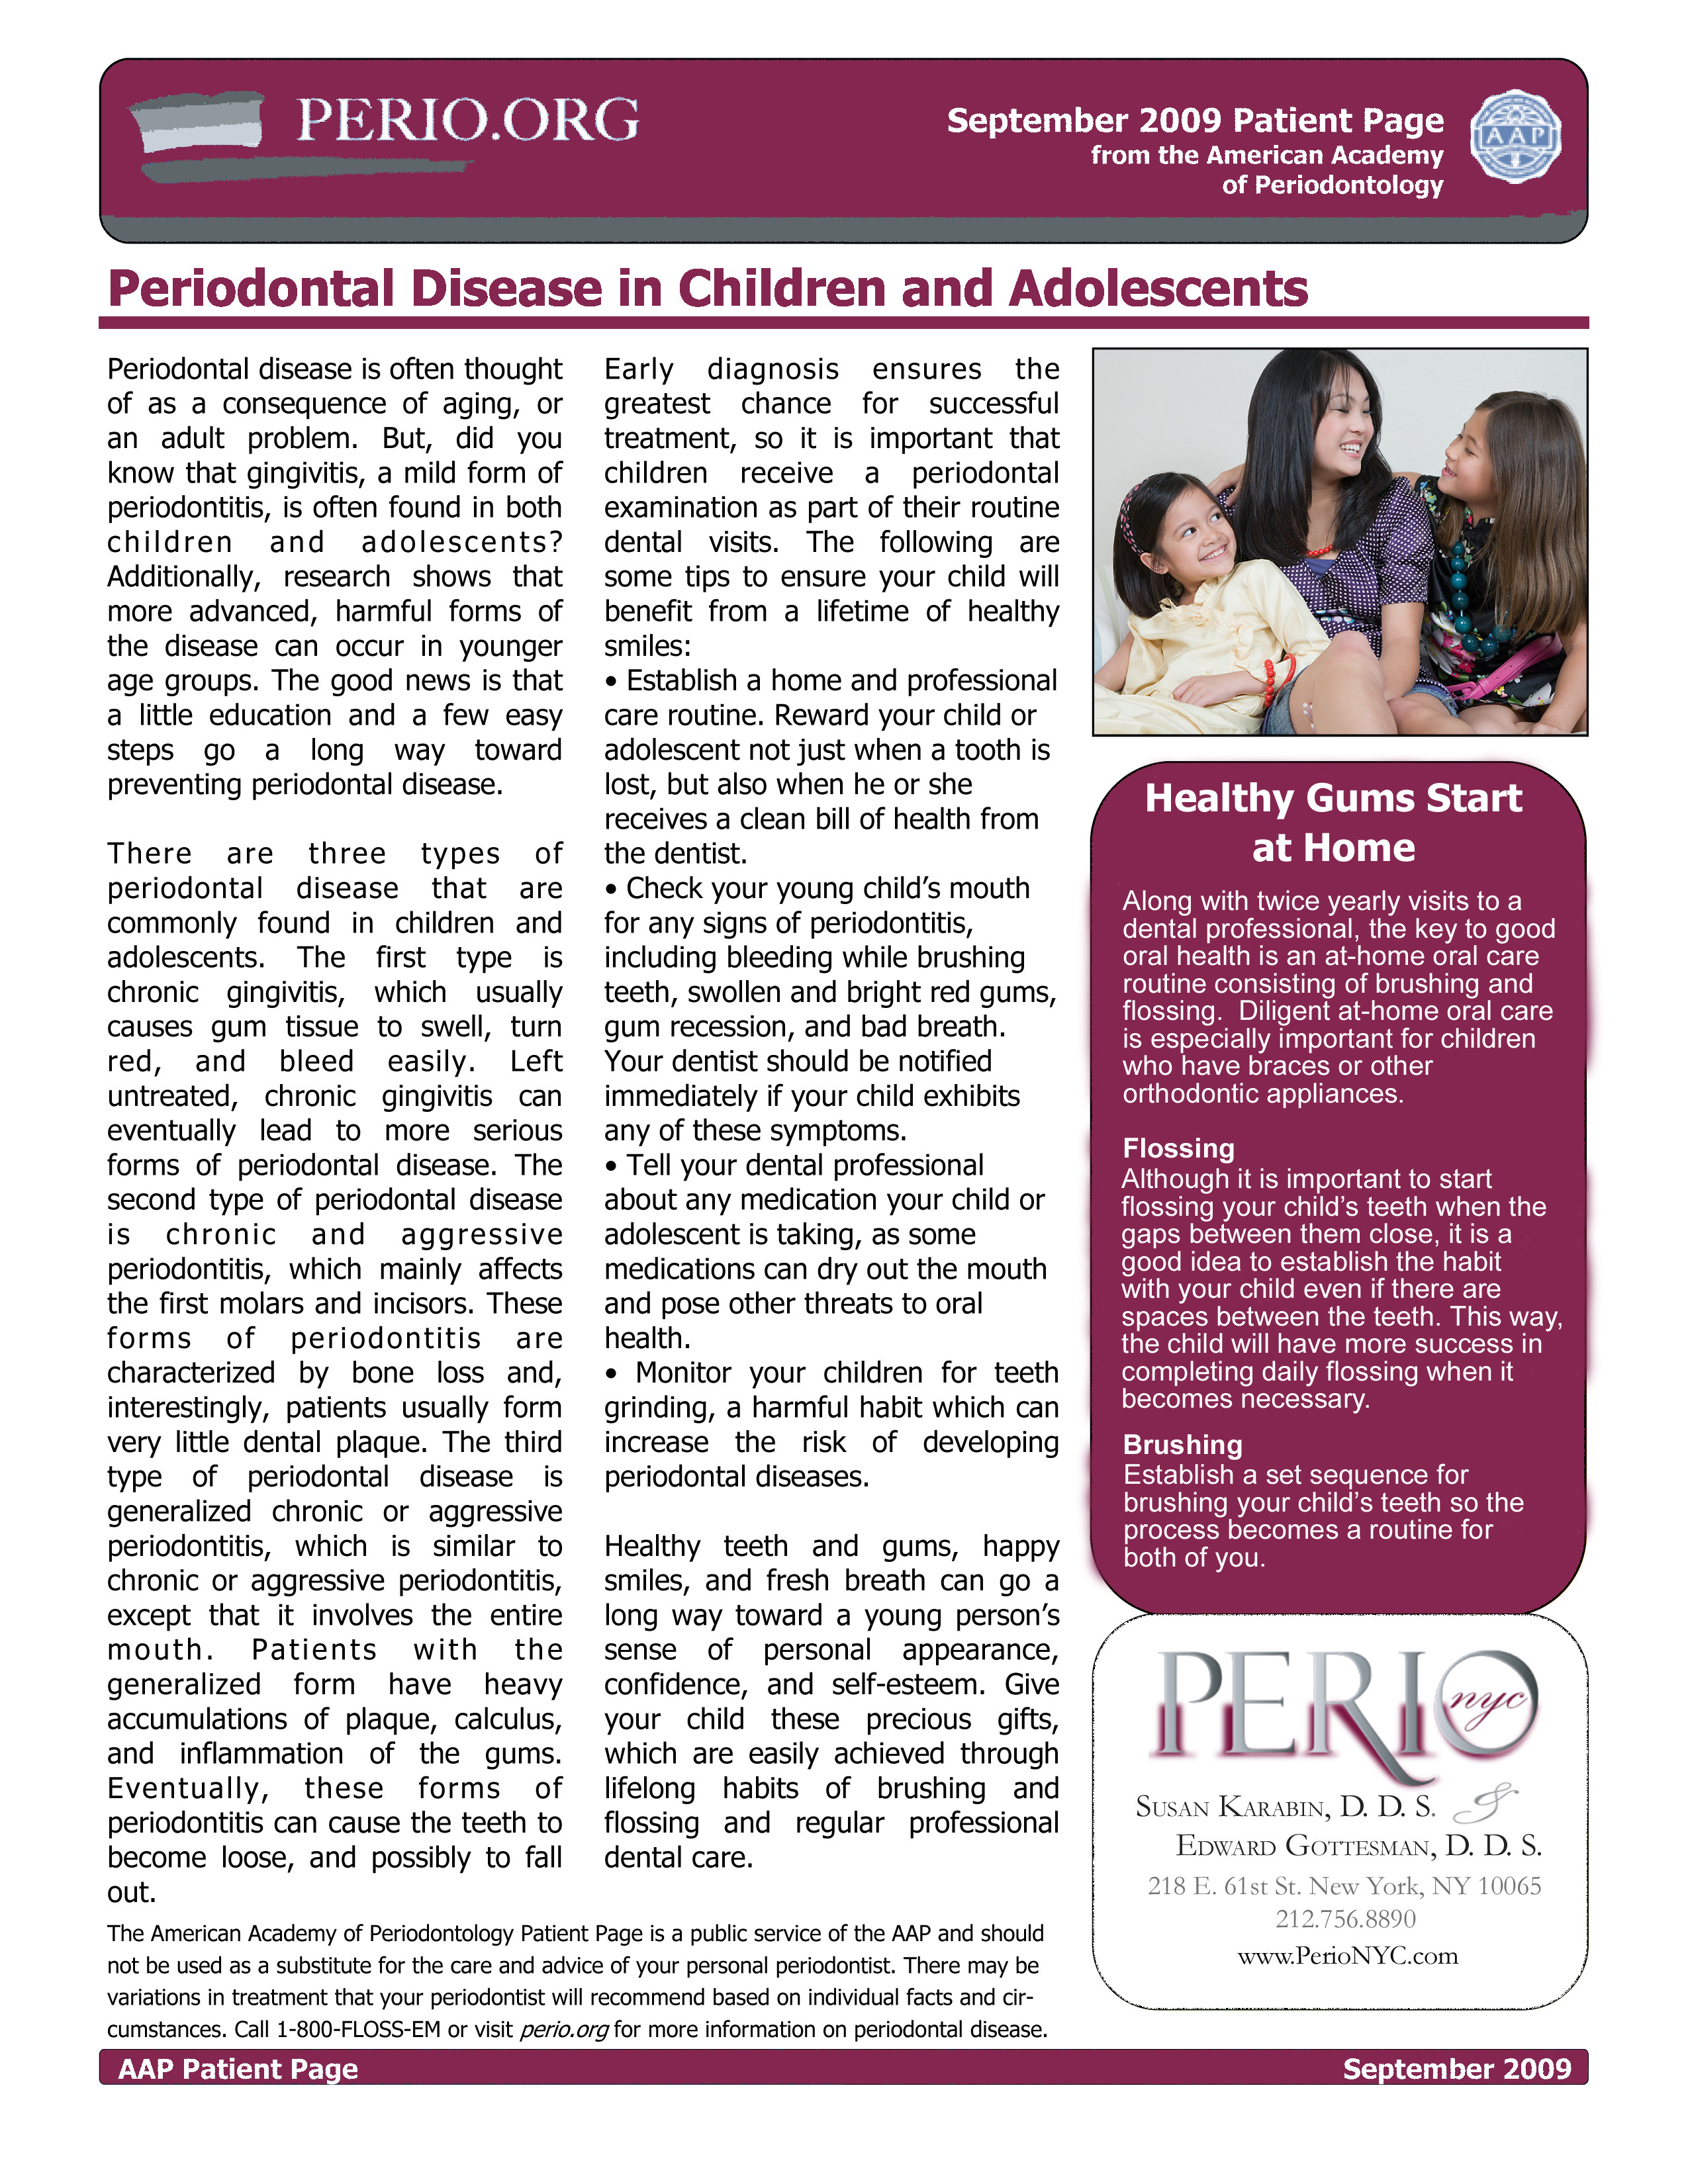 Children and Periodontal Disease